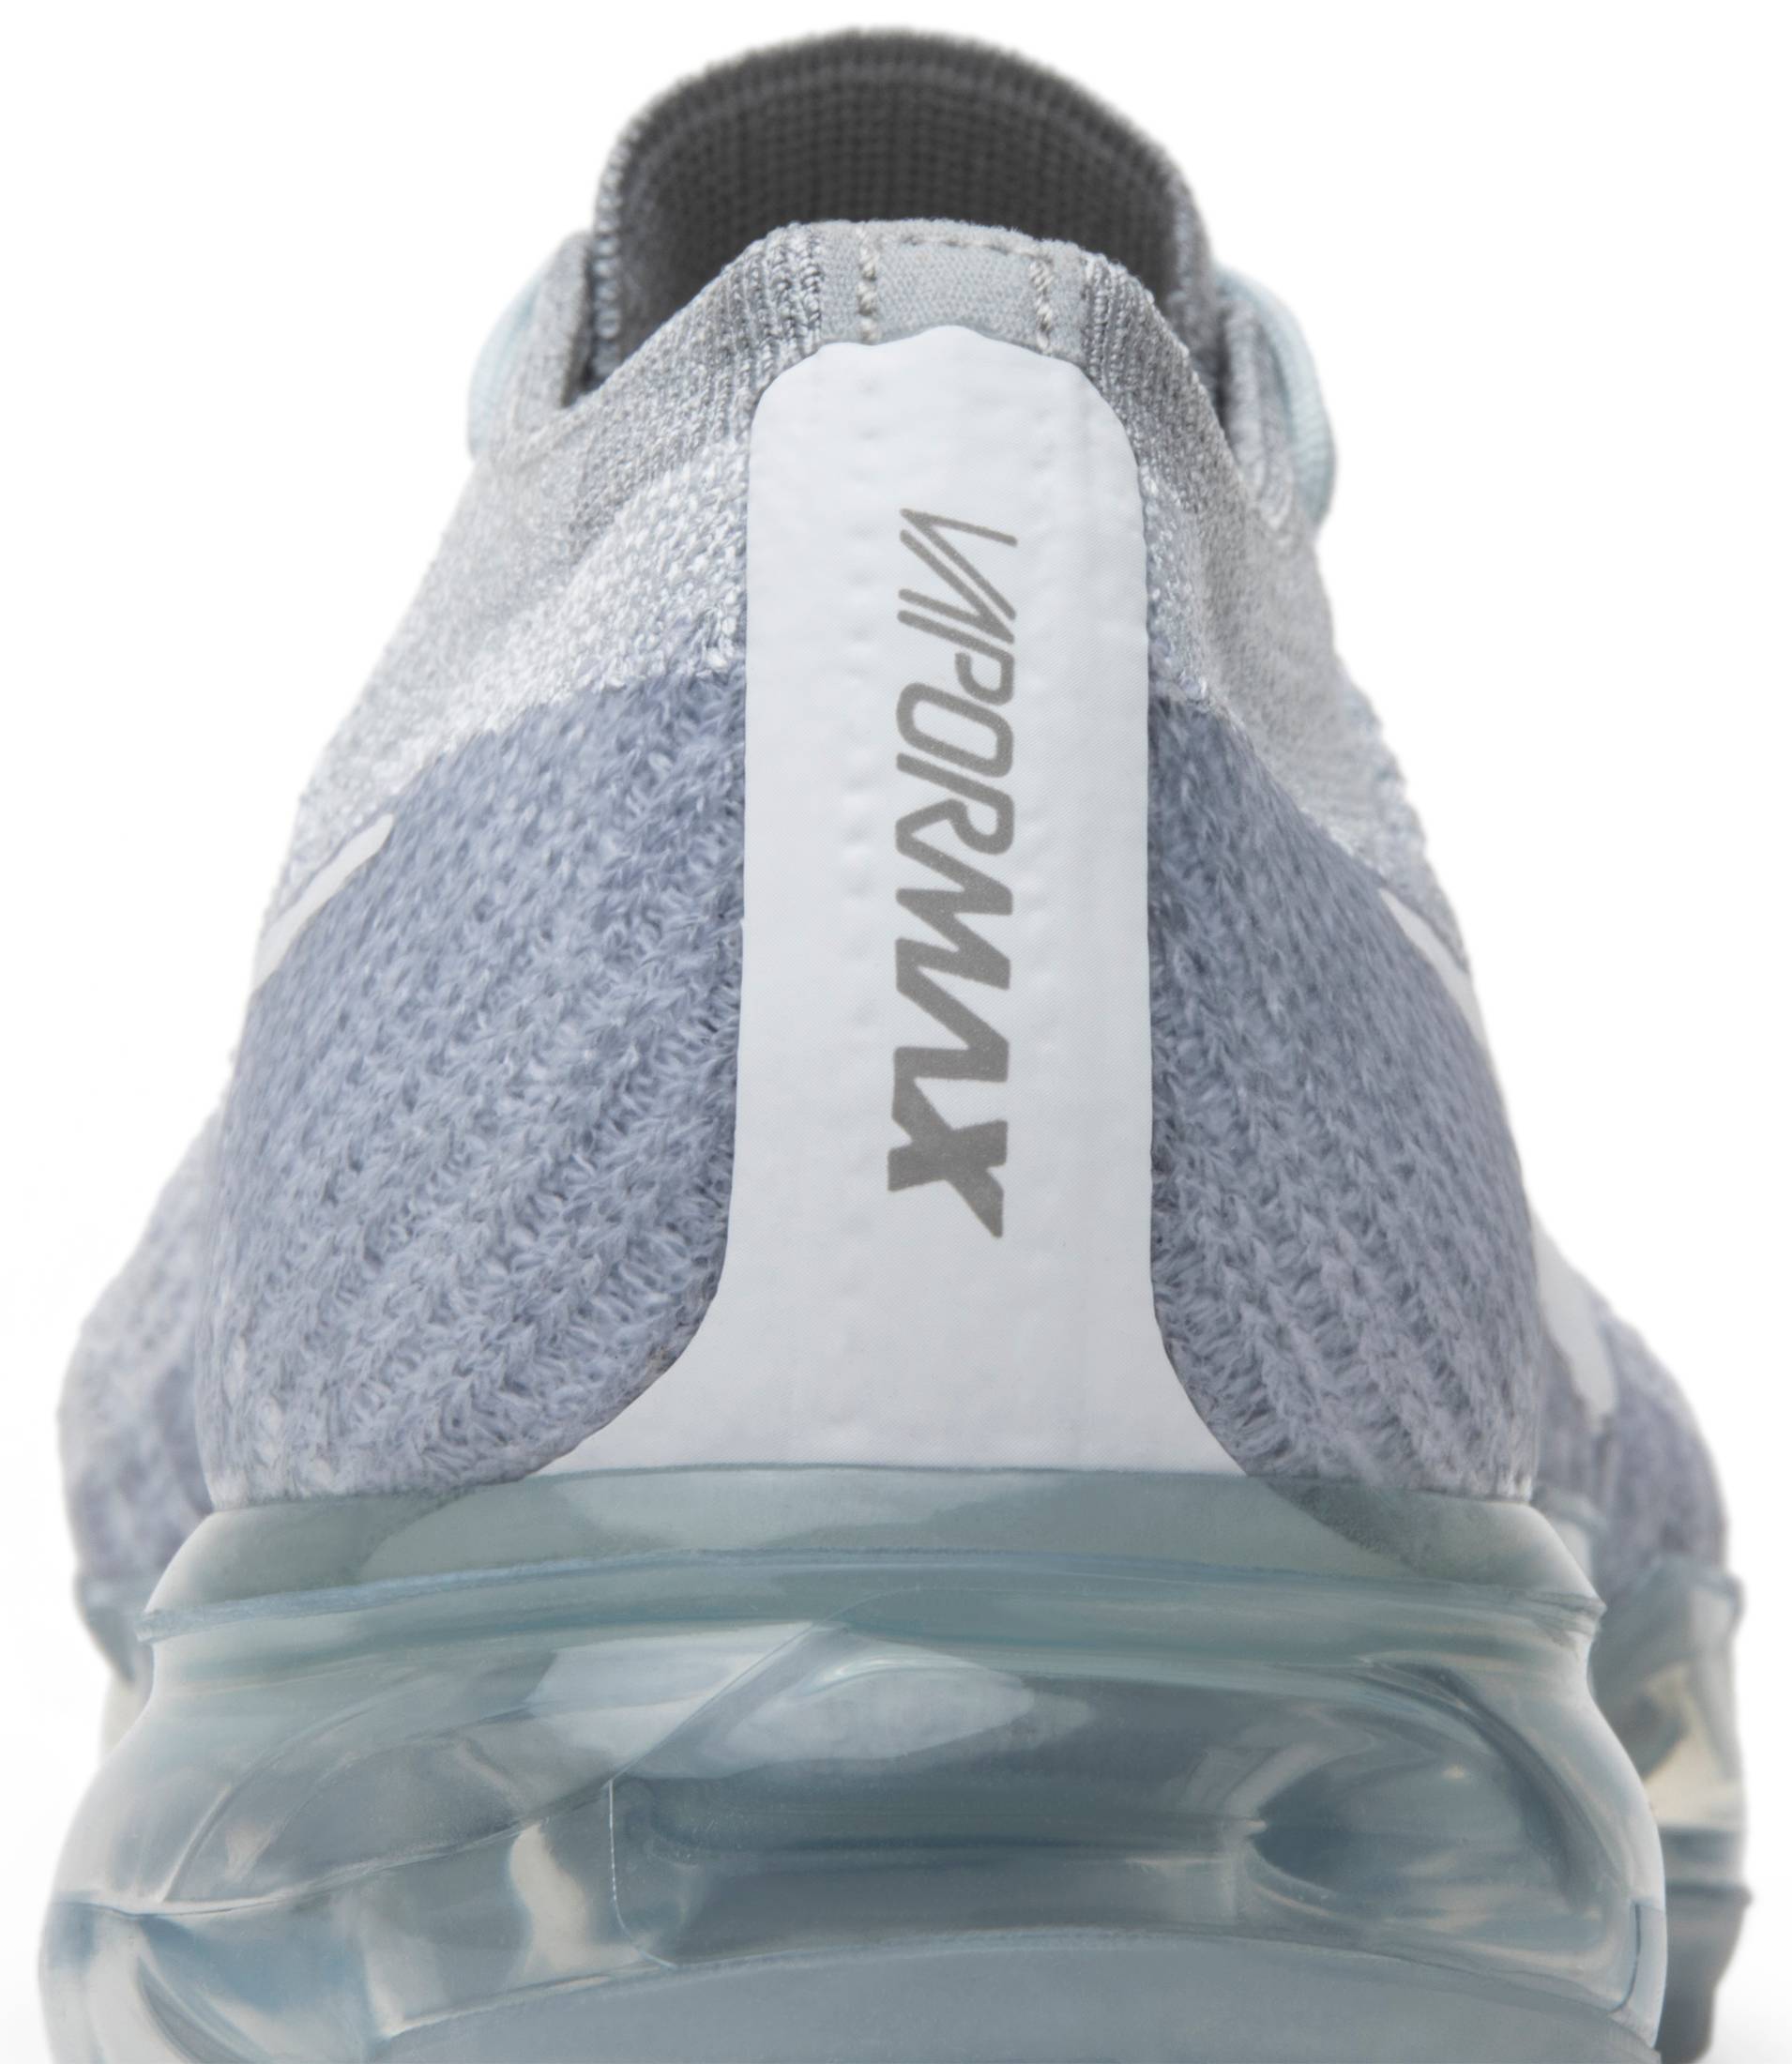 Wmns Air VaporMax 'Pure Platinum' - Nike - 849557 004 | GOAT